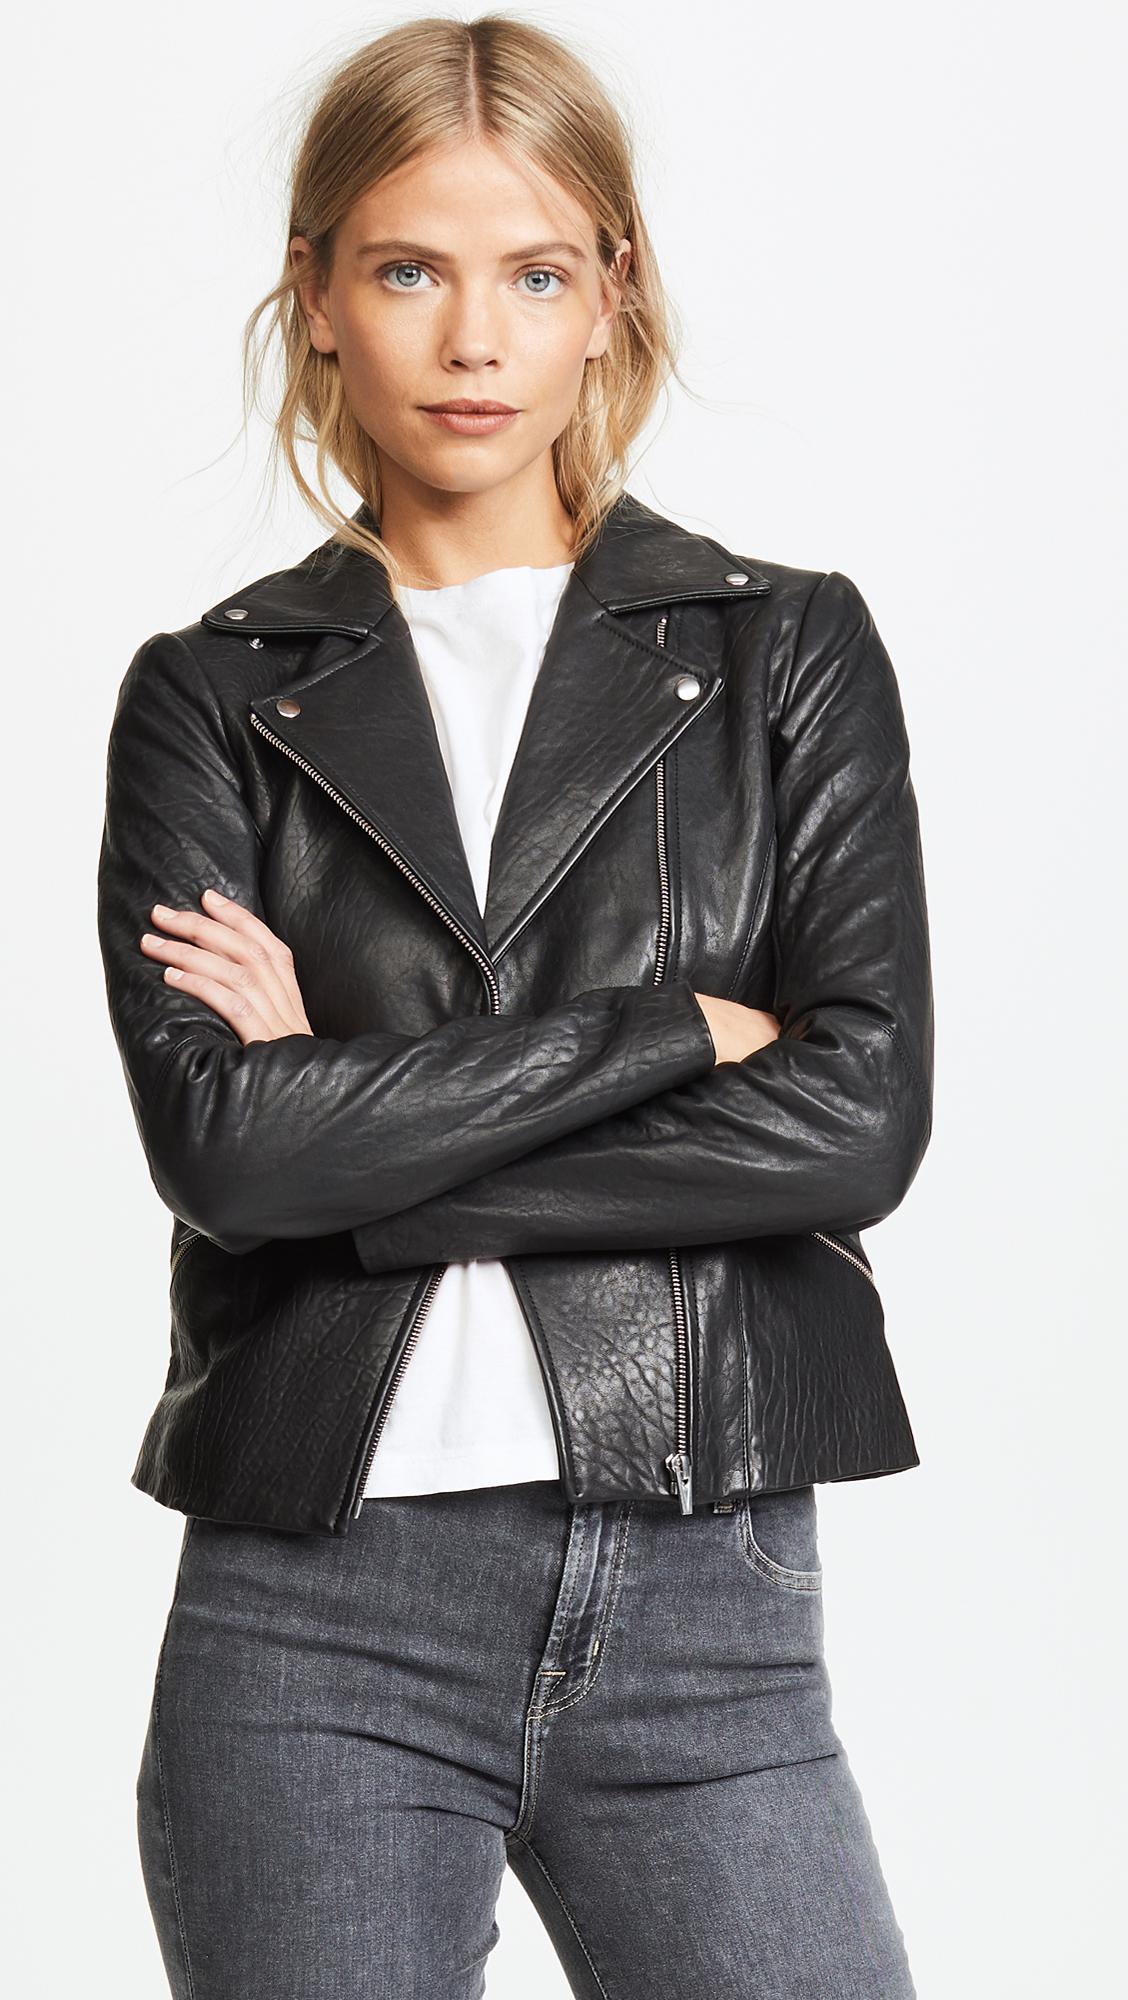 VEDA Dallas Leather Jacket in Black - Lyst